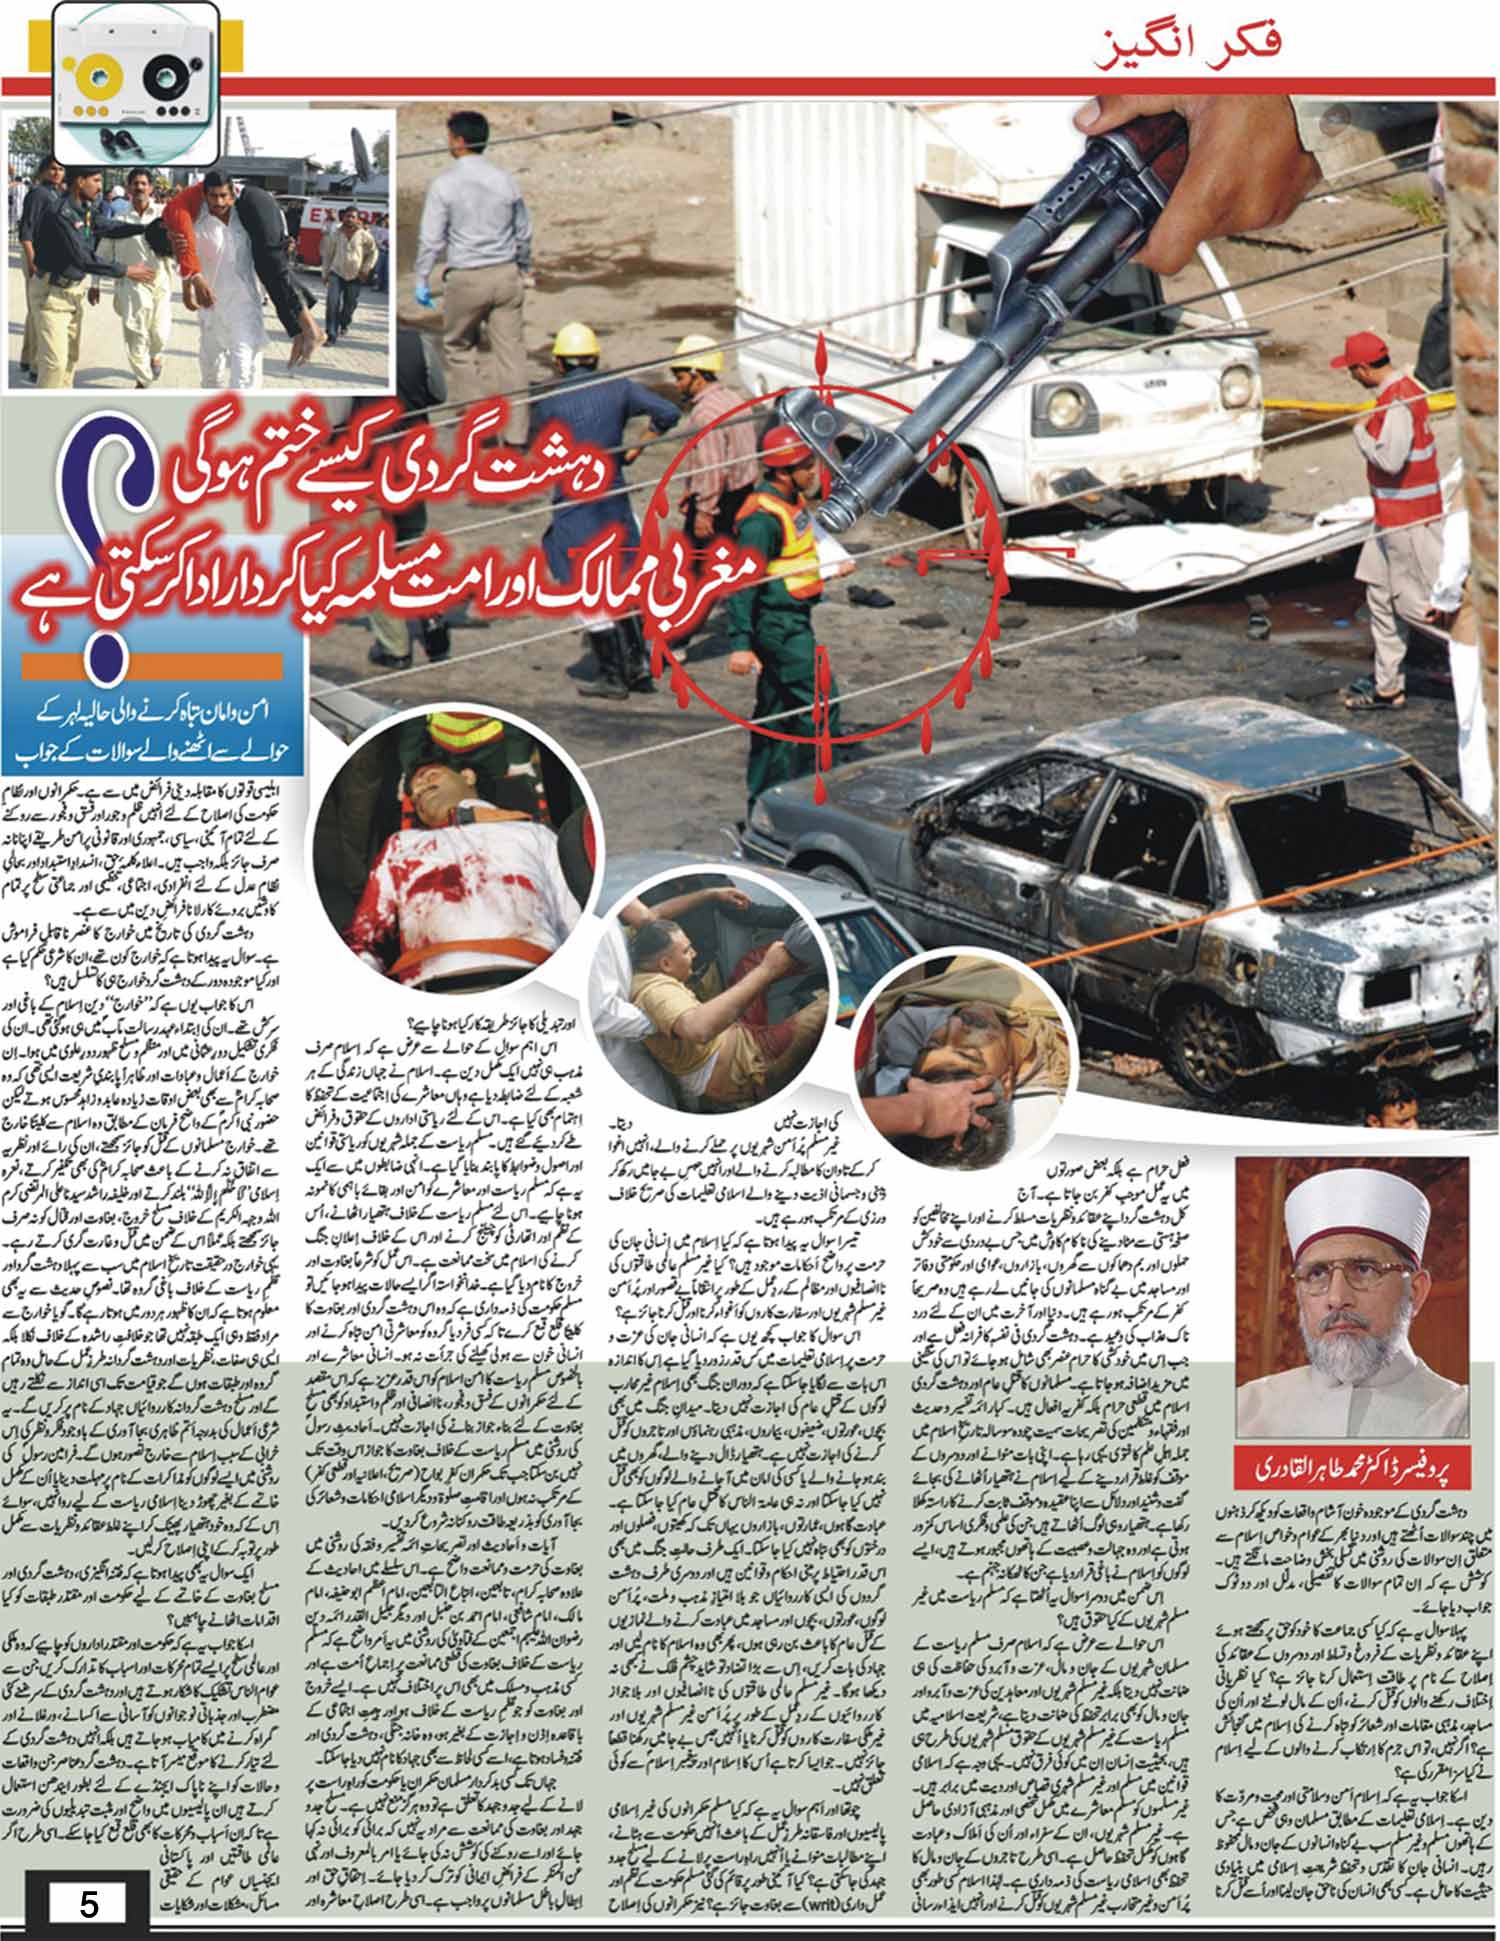 Minhaj-ul-Quran  Print Media Coverage Sunday Magazine Pakistan Page: 5